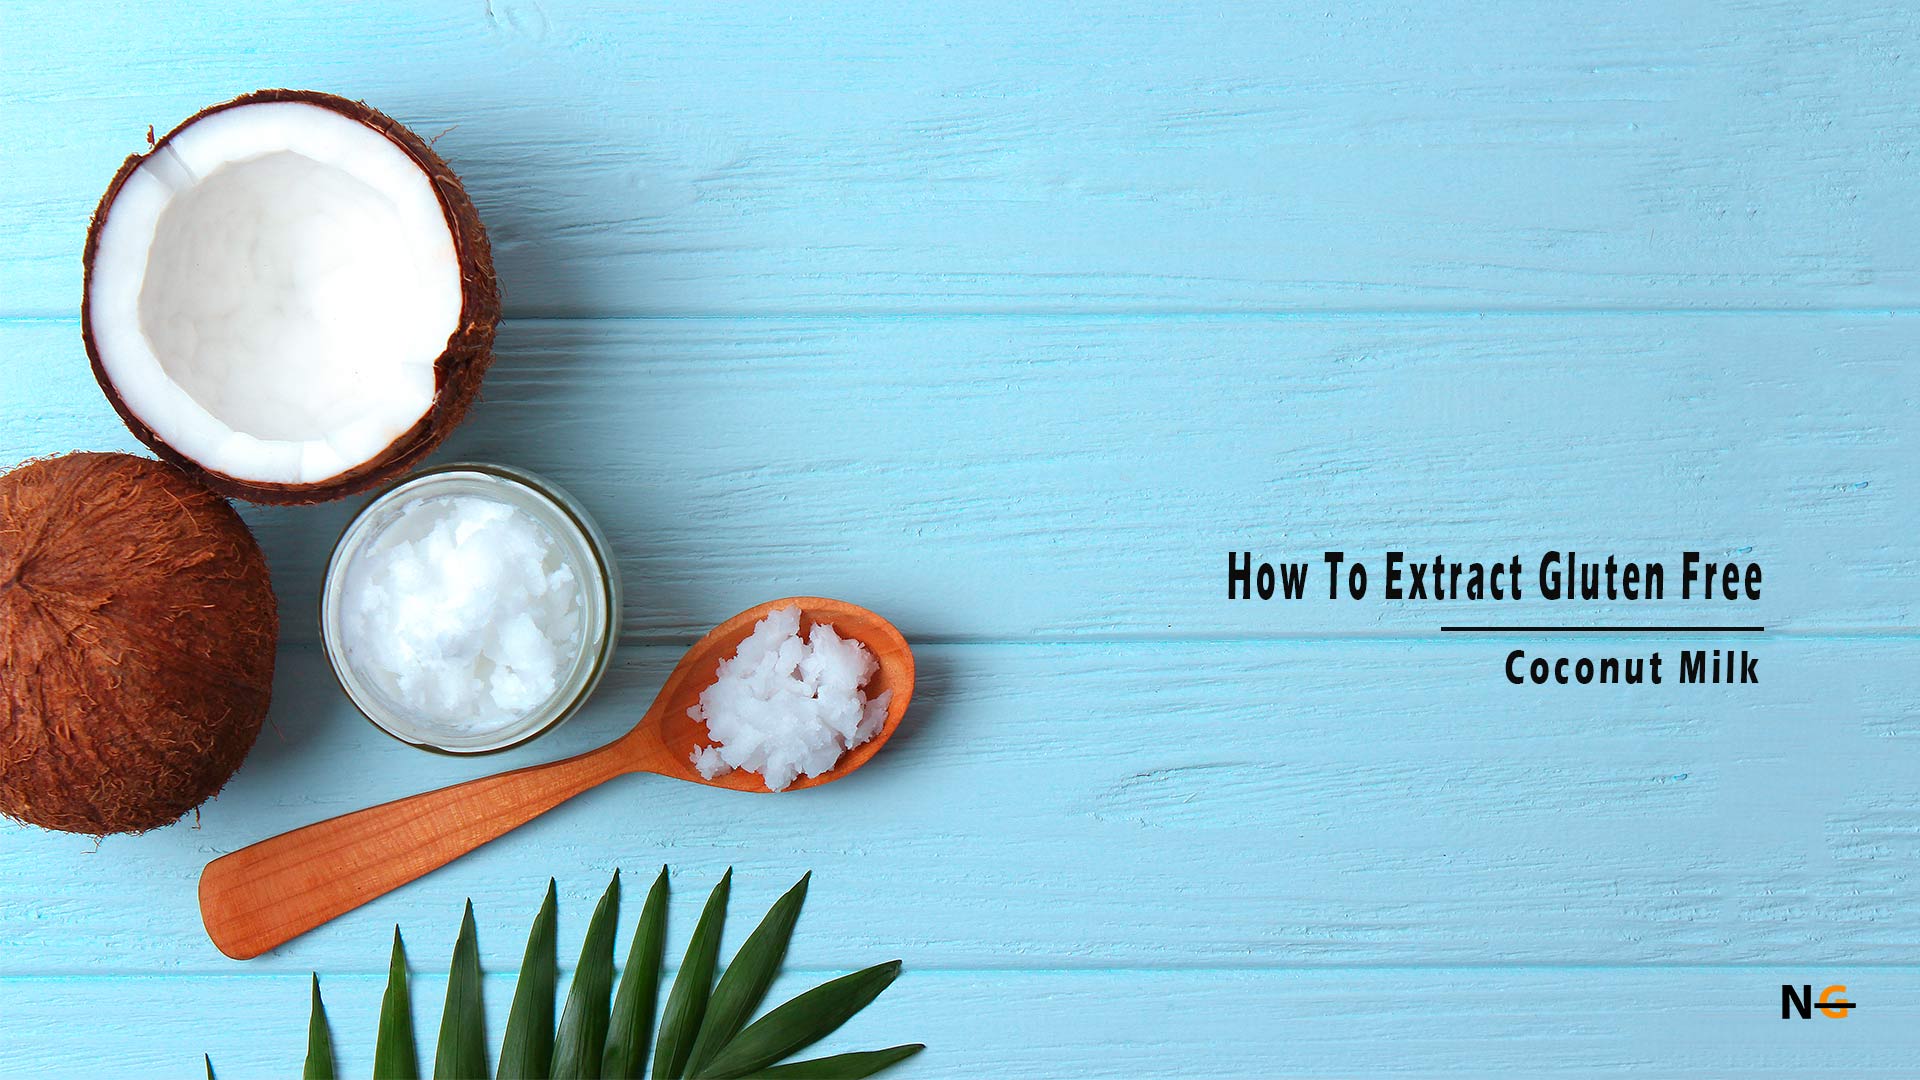 How to Extract Gluten Free Coconut Milk